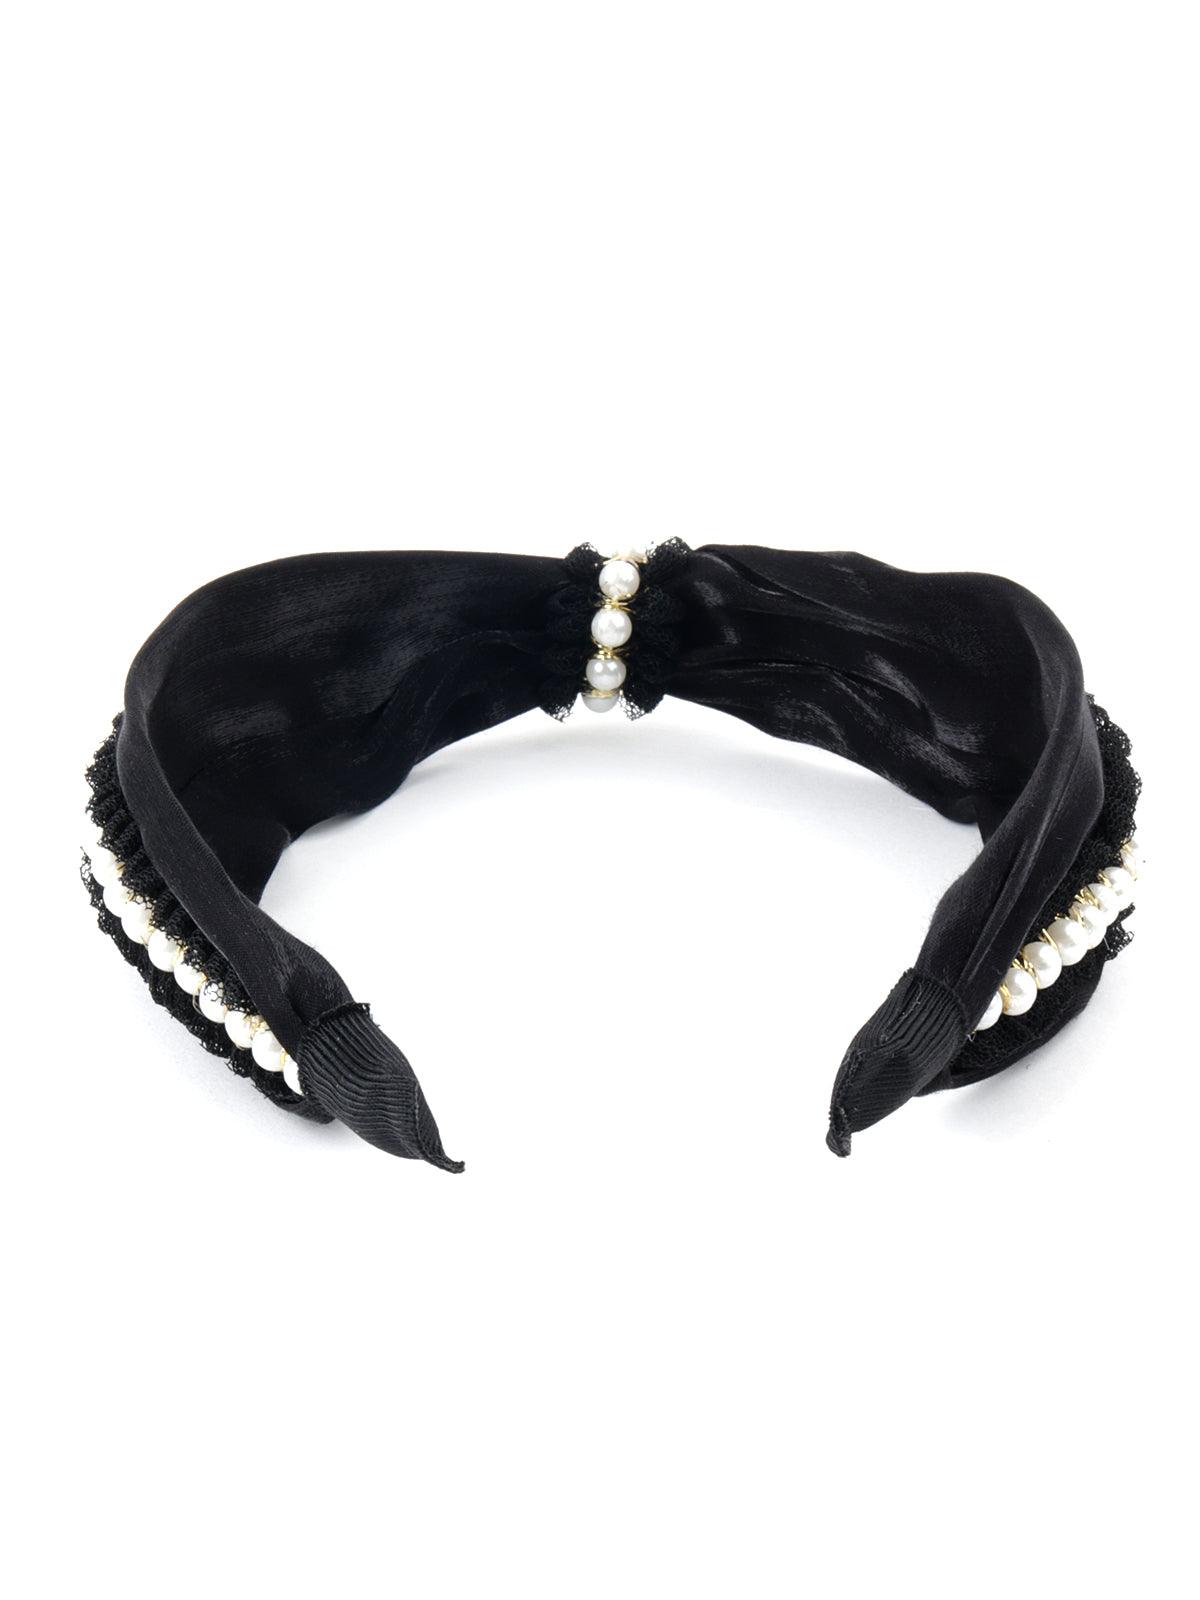 Black Ornate Pearl Hairband - Odette